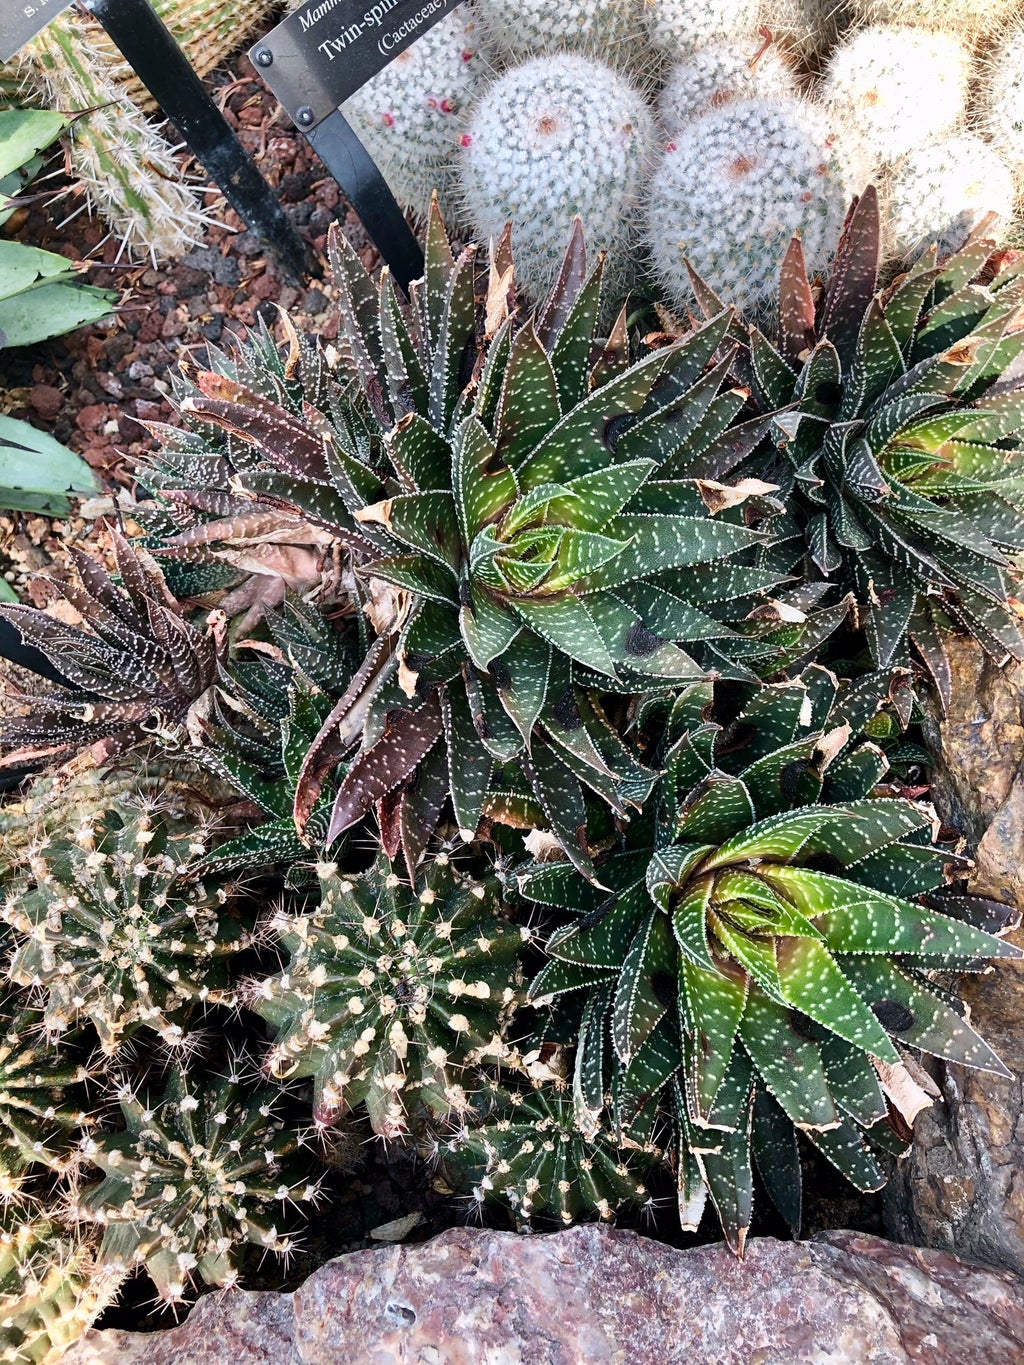 Star shaped cactus at the Chicago Botanic Garden